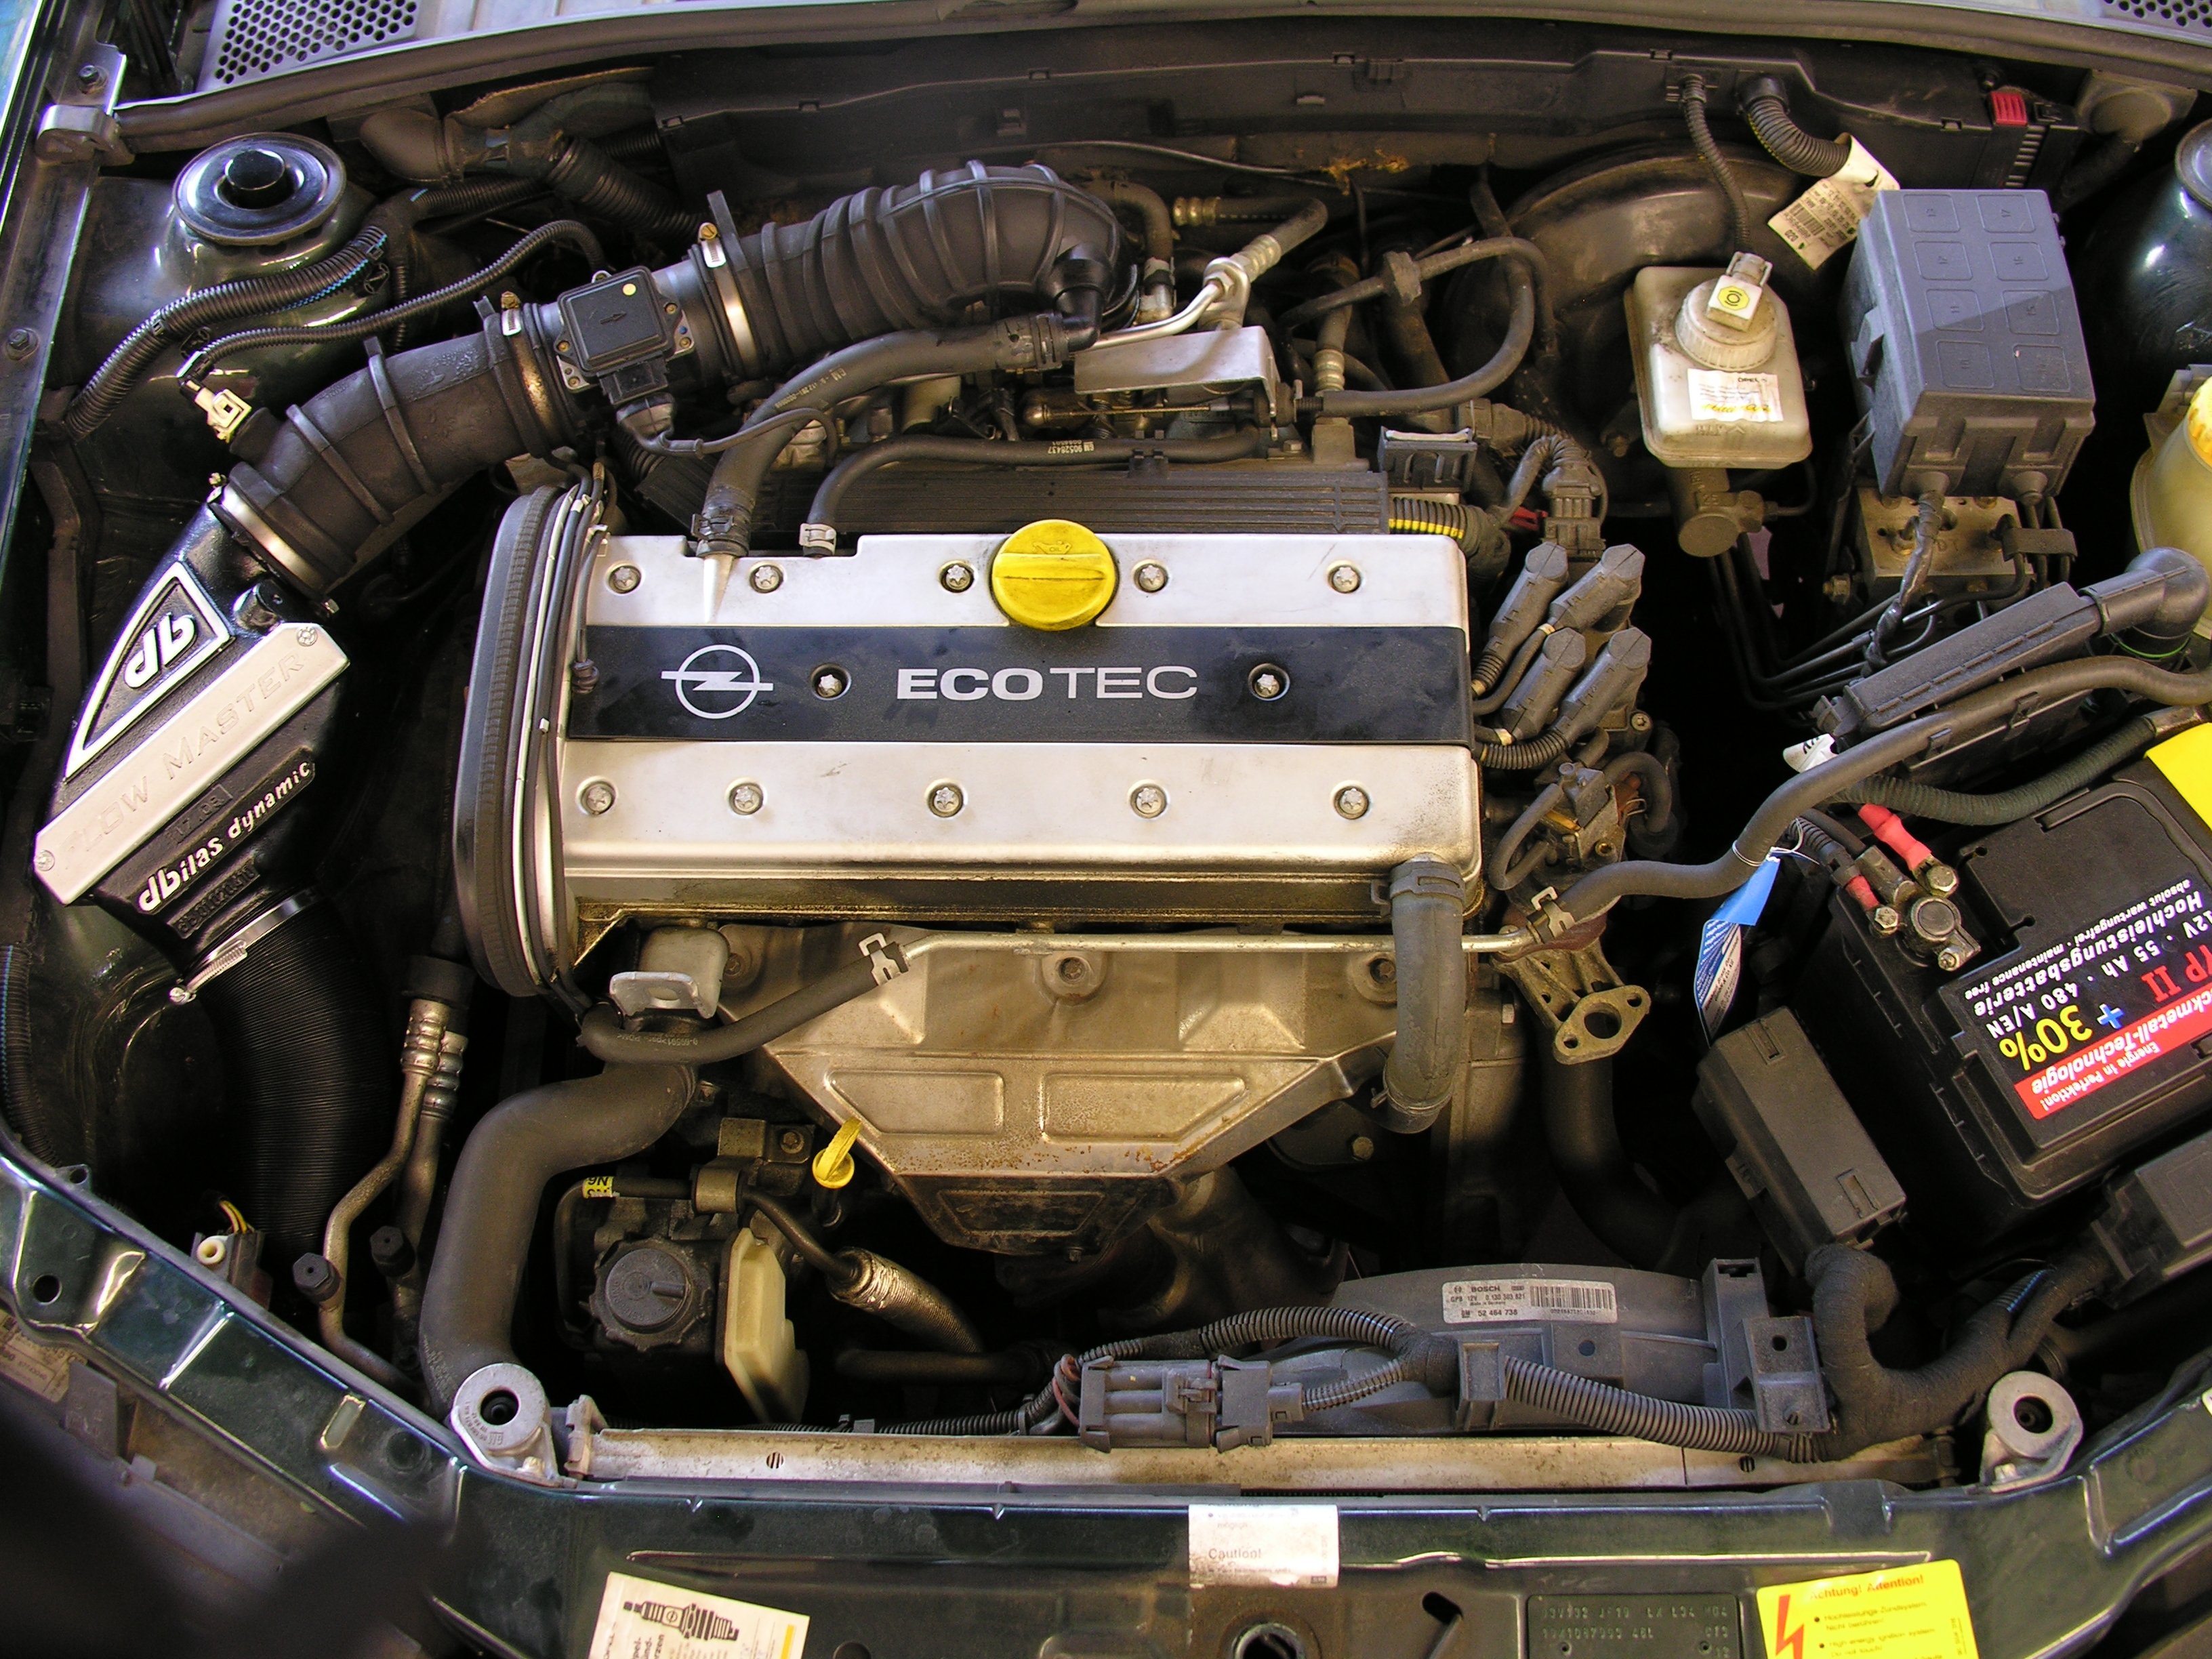 FlowMaster Kit for Opel / Vauxhall  Vectra B  X18XE, X18XE1, Z18XE, X20XEV, X25XE, X25XEi  i500, Y26SE